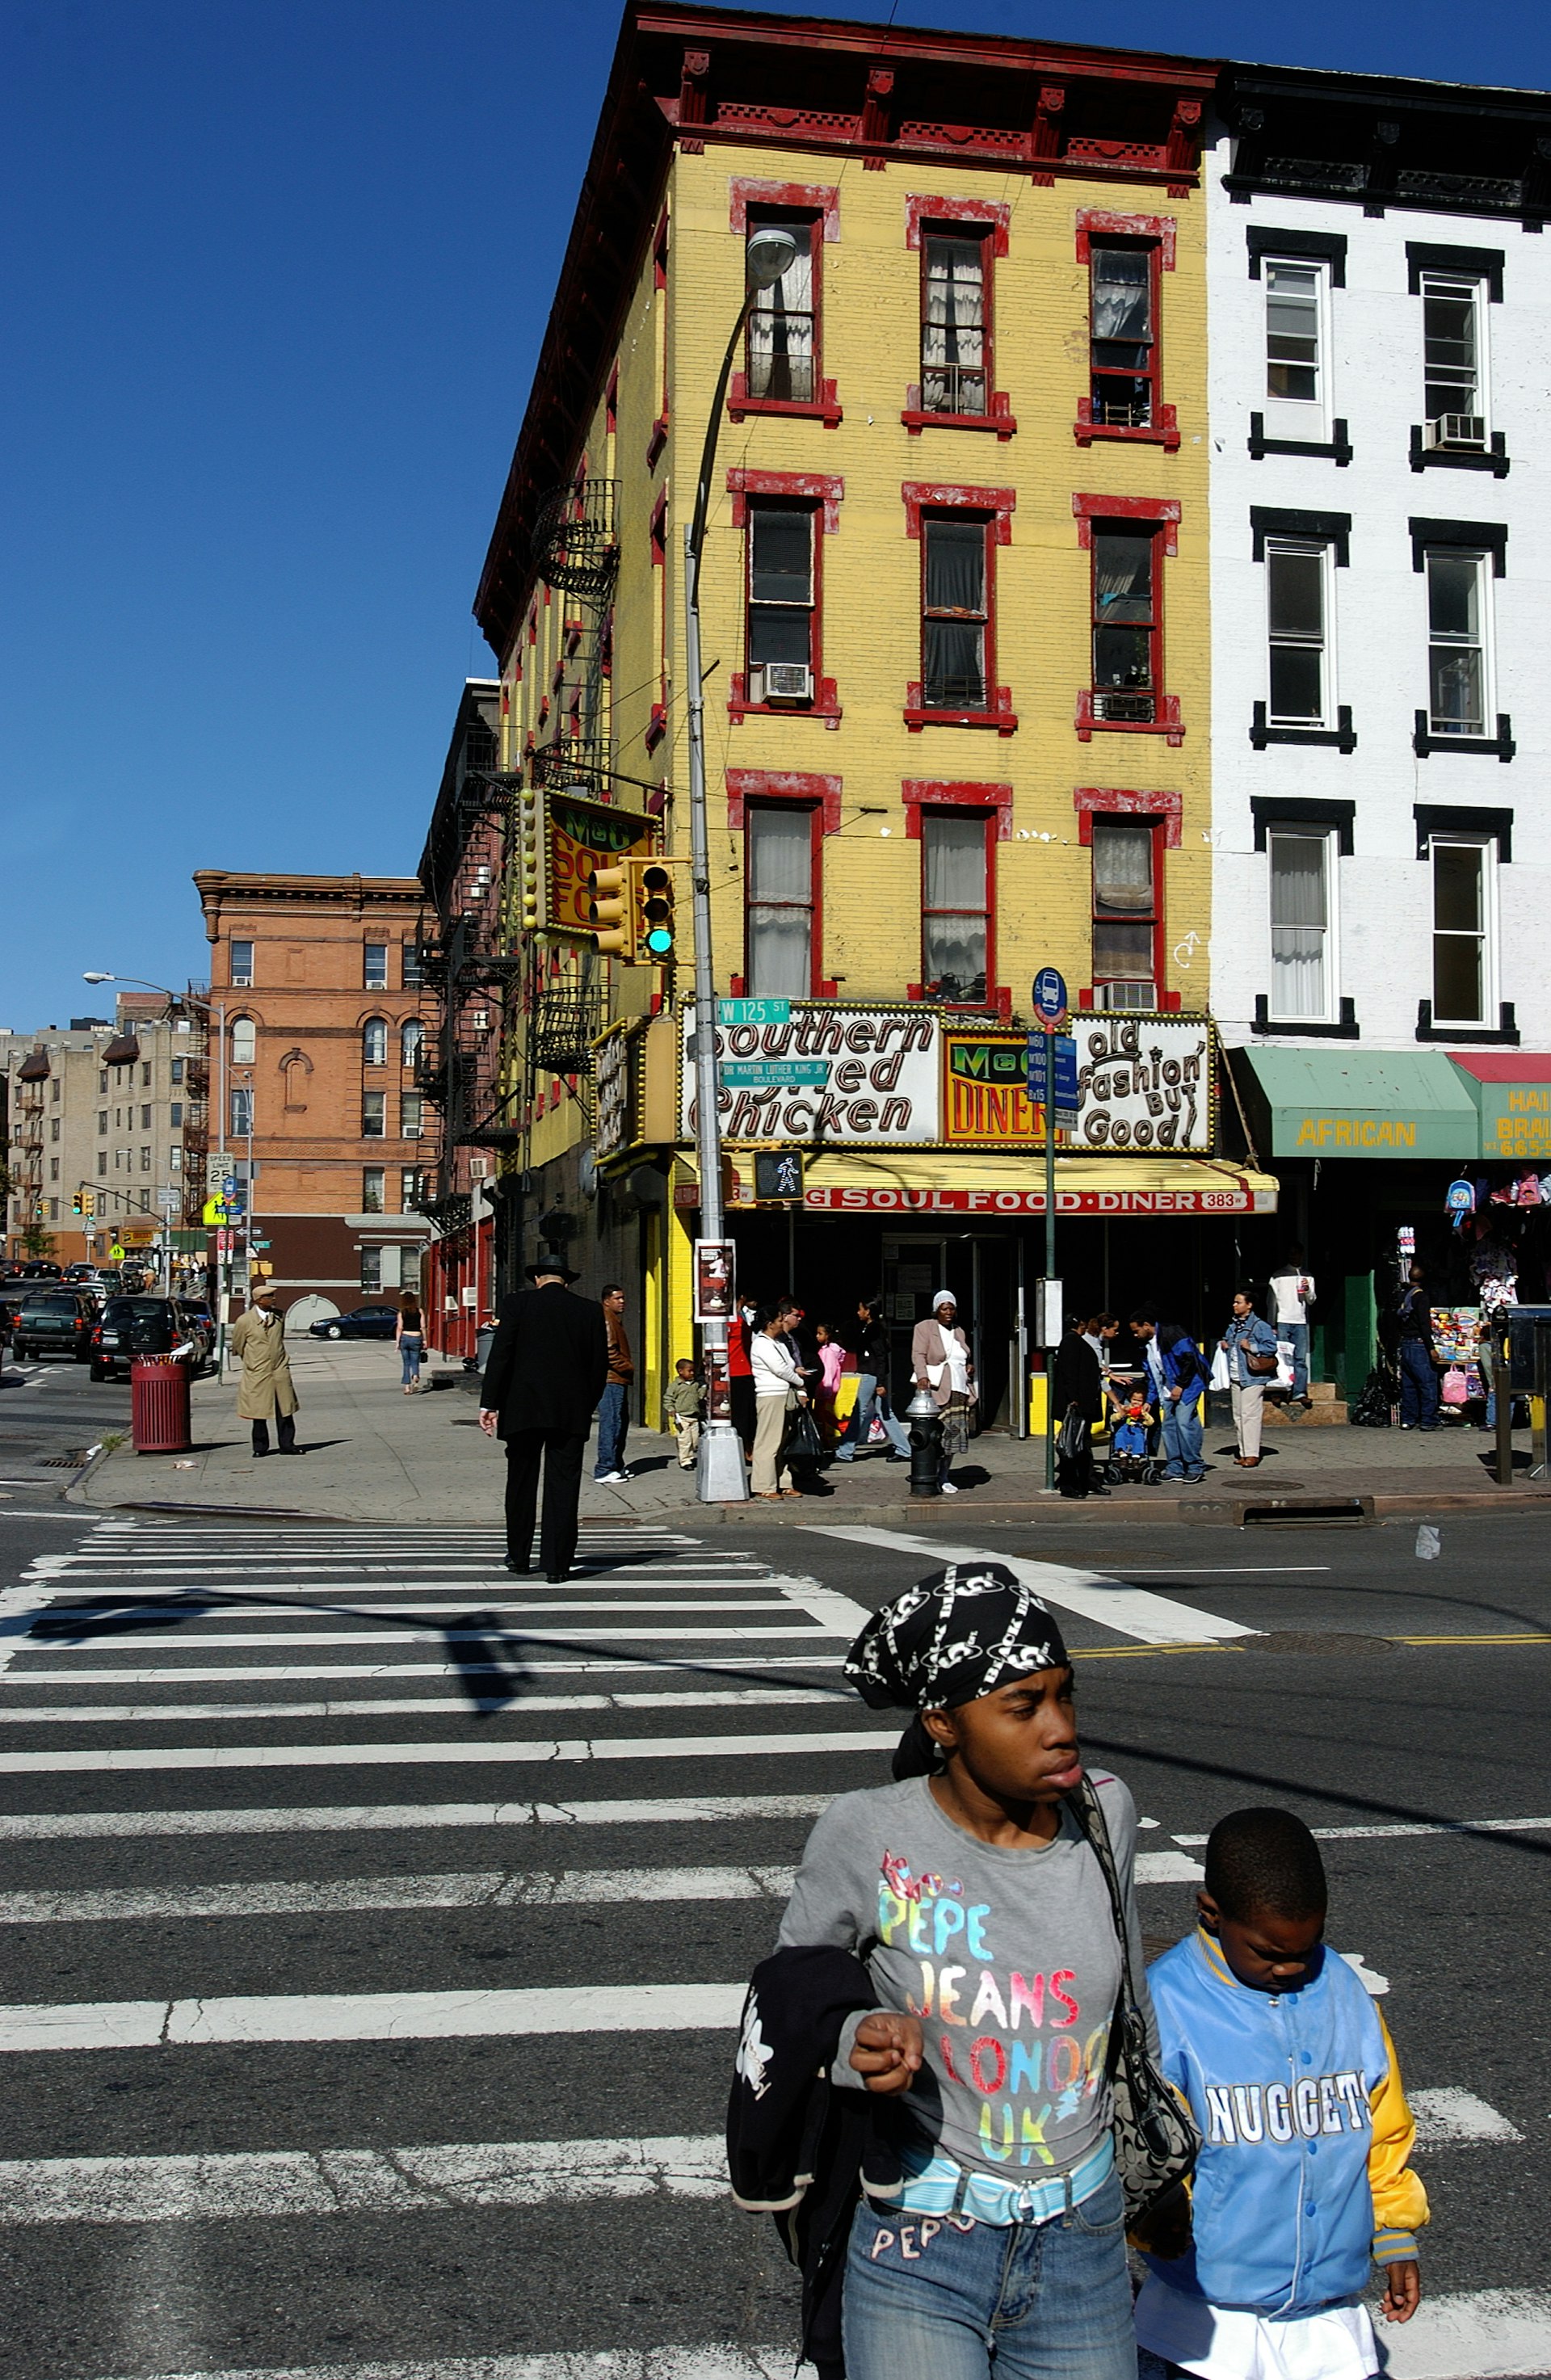 125th Street in Harlem